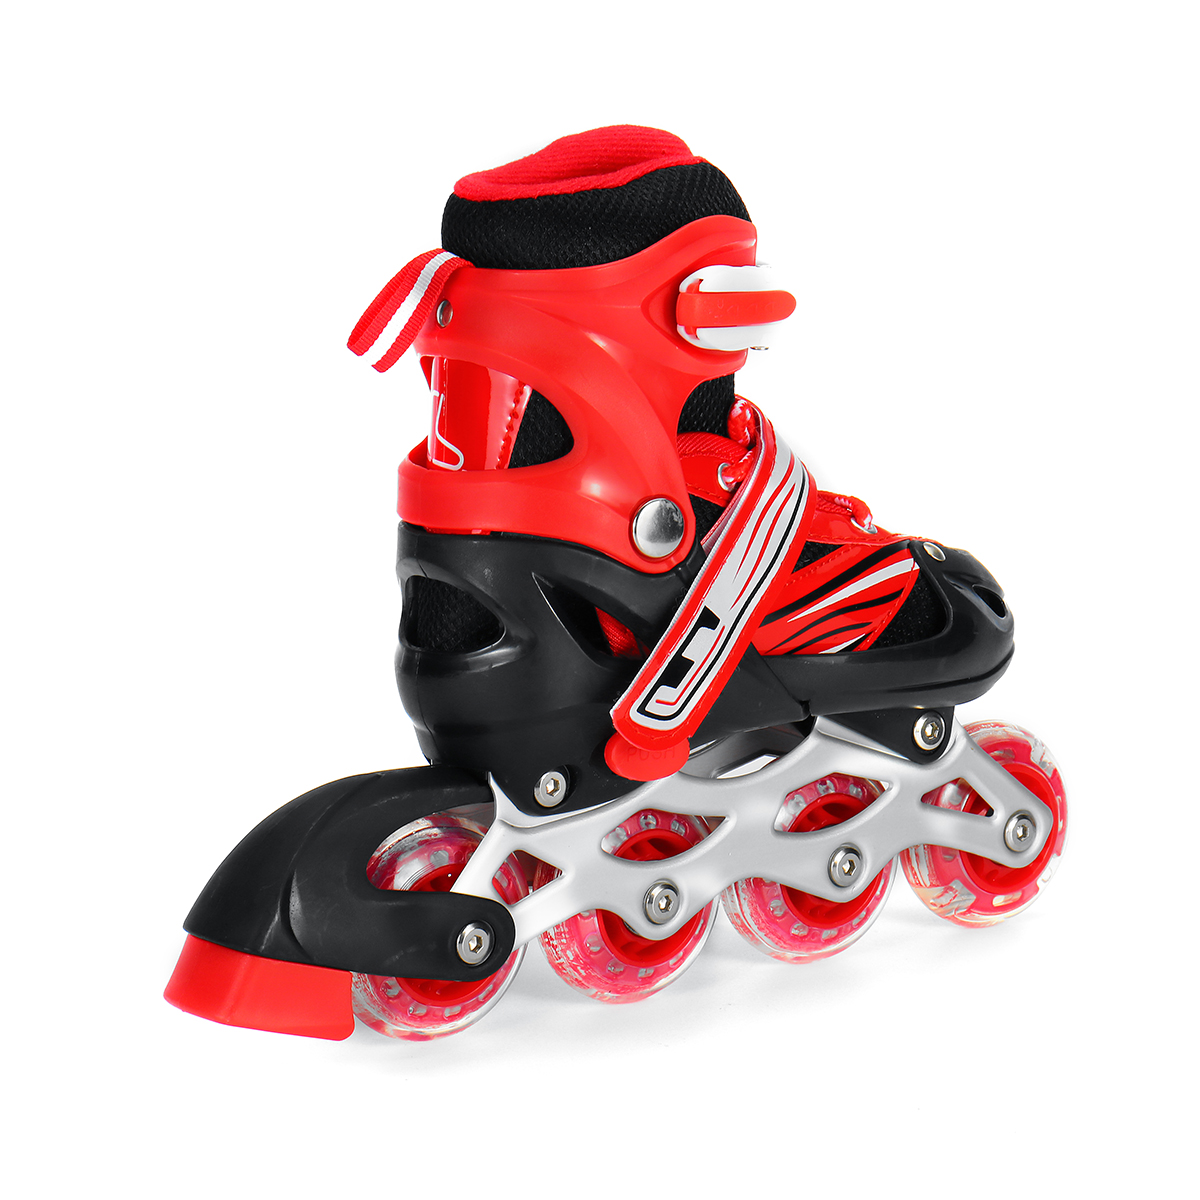 Kids-Inline-Skates-Professional-Single-Row-4-Wheels-Skating-Shoes-Children-Adult-1819599-9